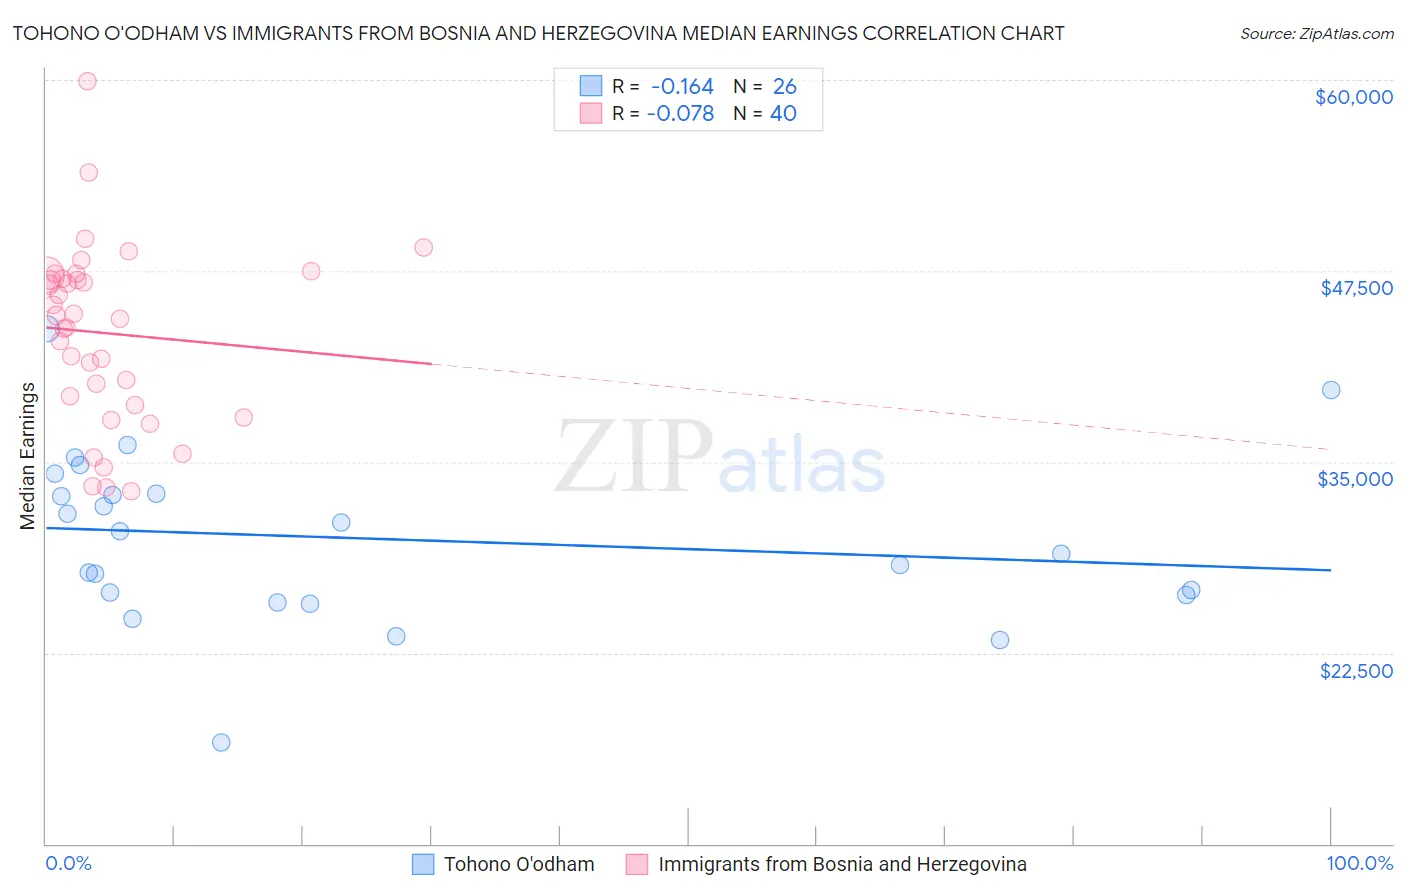 Tohono O'odham vs Immigrants from Bosnia and Herzegovina Median Earnings